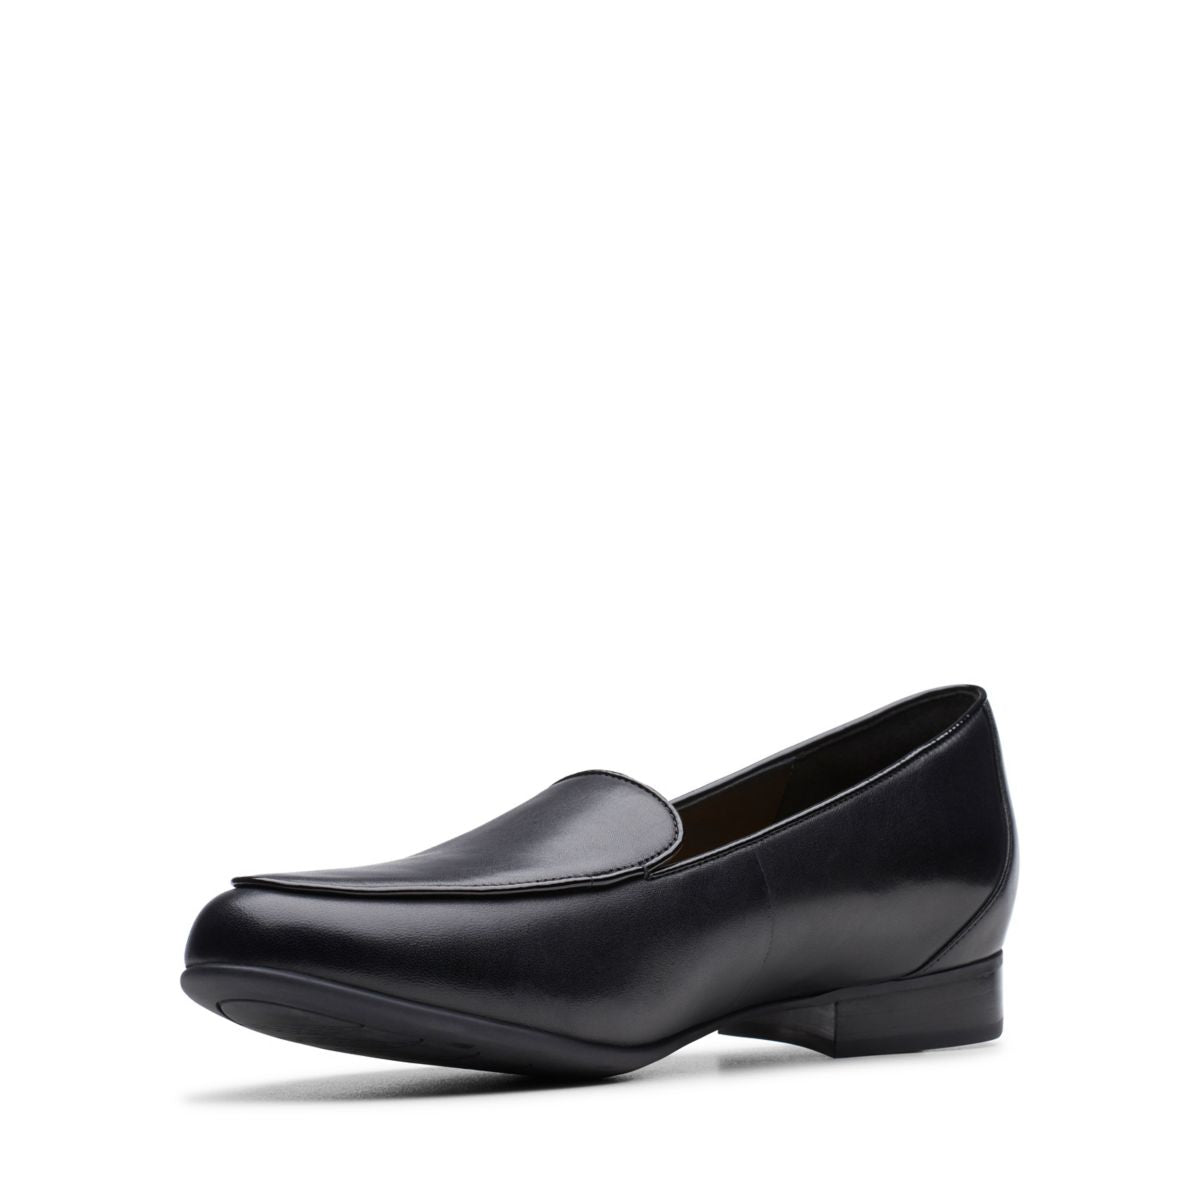 Clarks Un Ravel – Valentino's Comfort Shoes